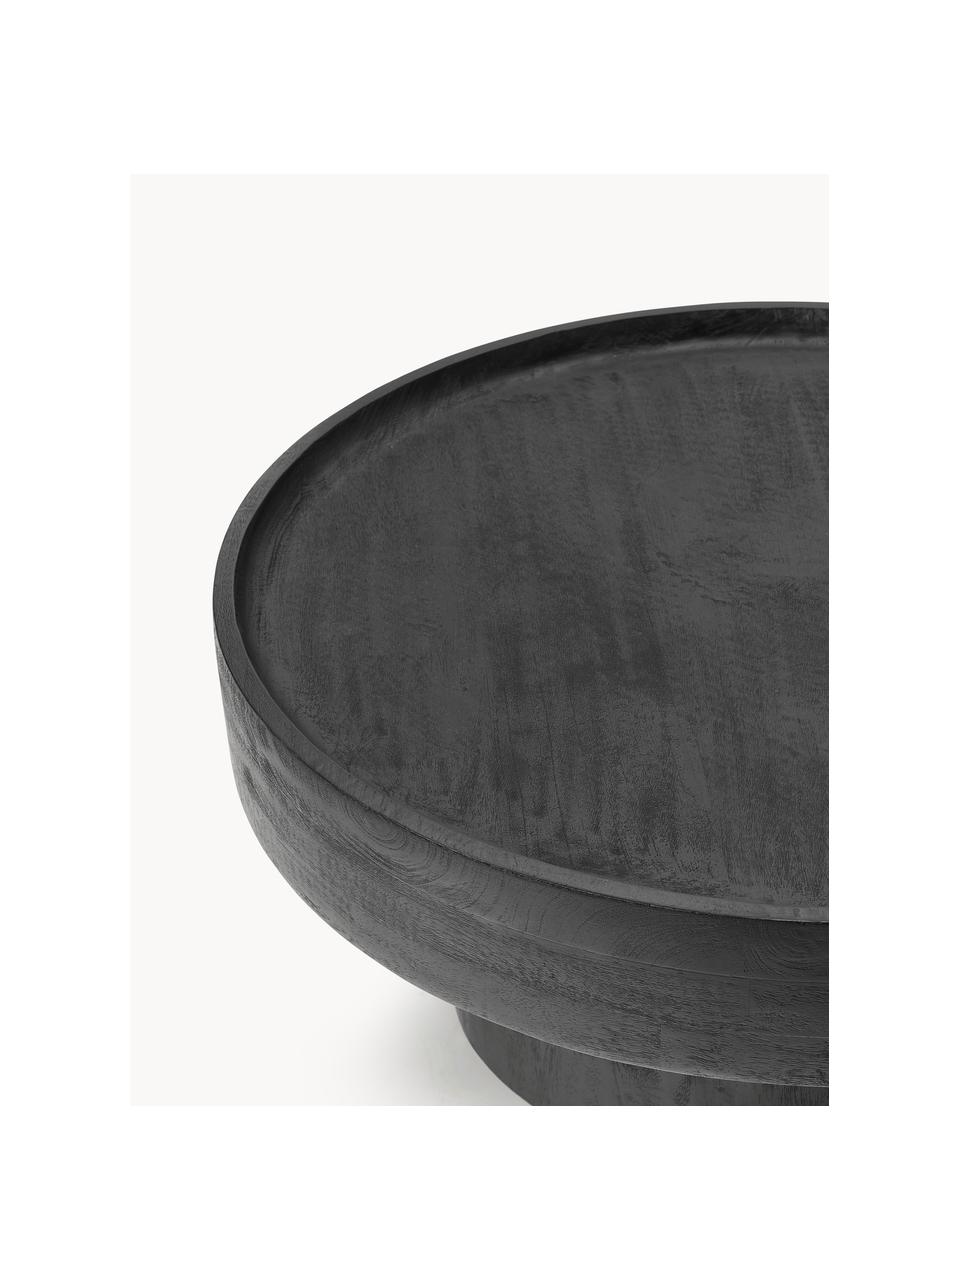 Table basse ronde en bois de manguier Benno, Manguier massif, laqué, Bois de manguier, noir laqué, Ø 80 cm